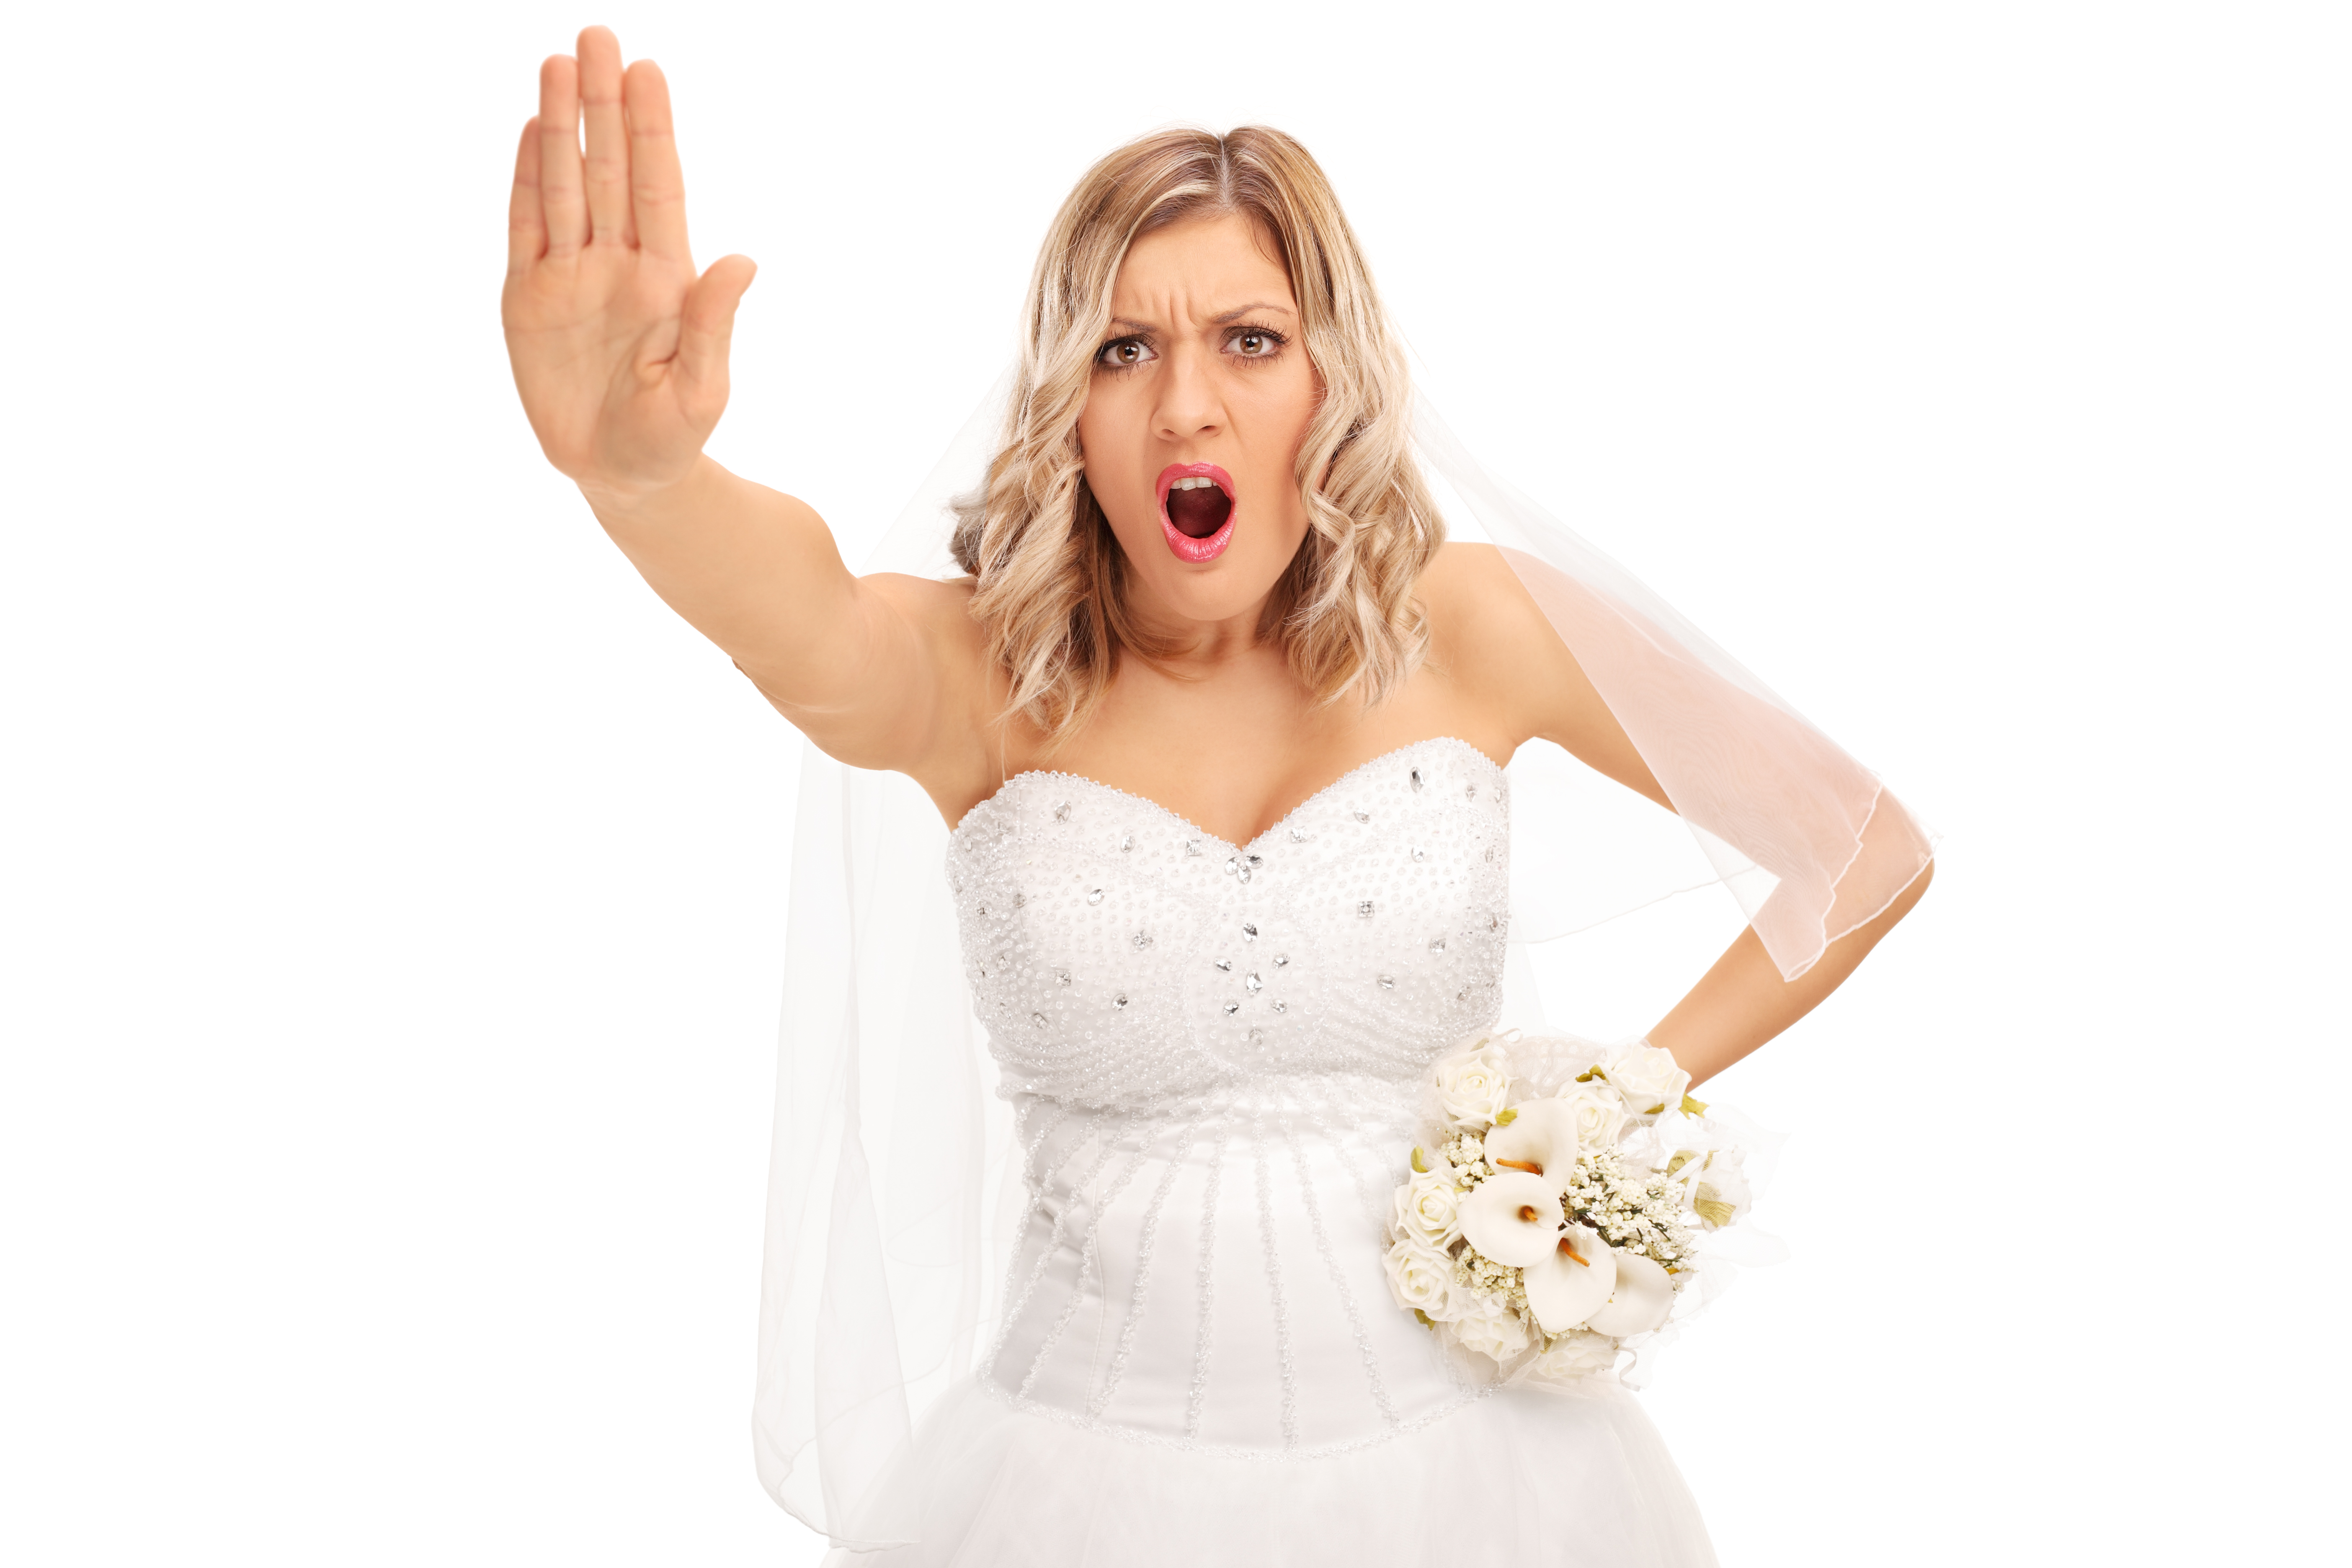 A displeased bride | Source: Shutterstock